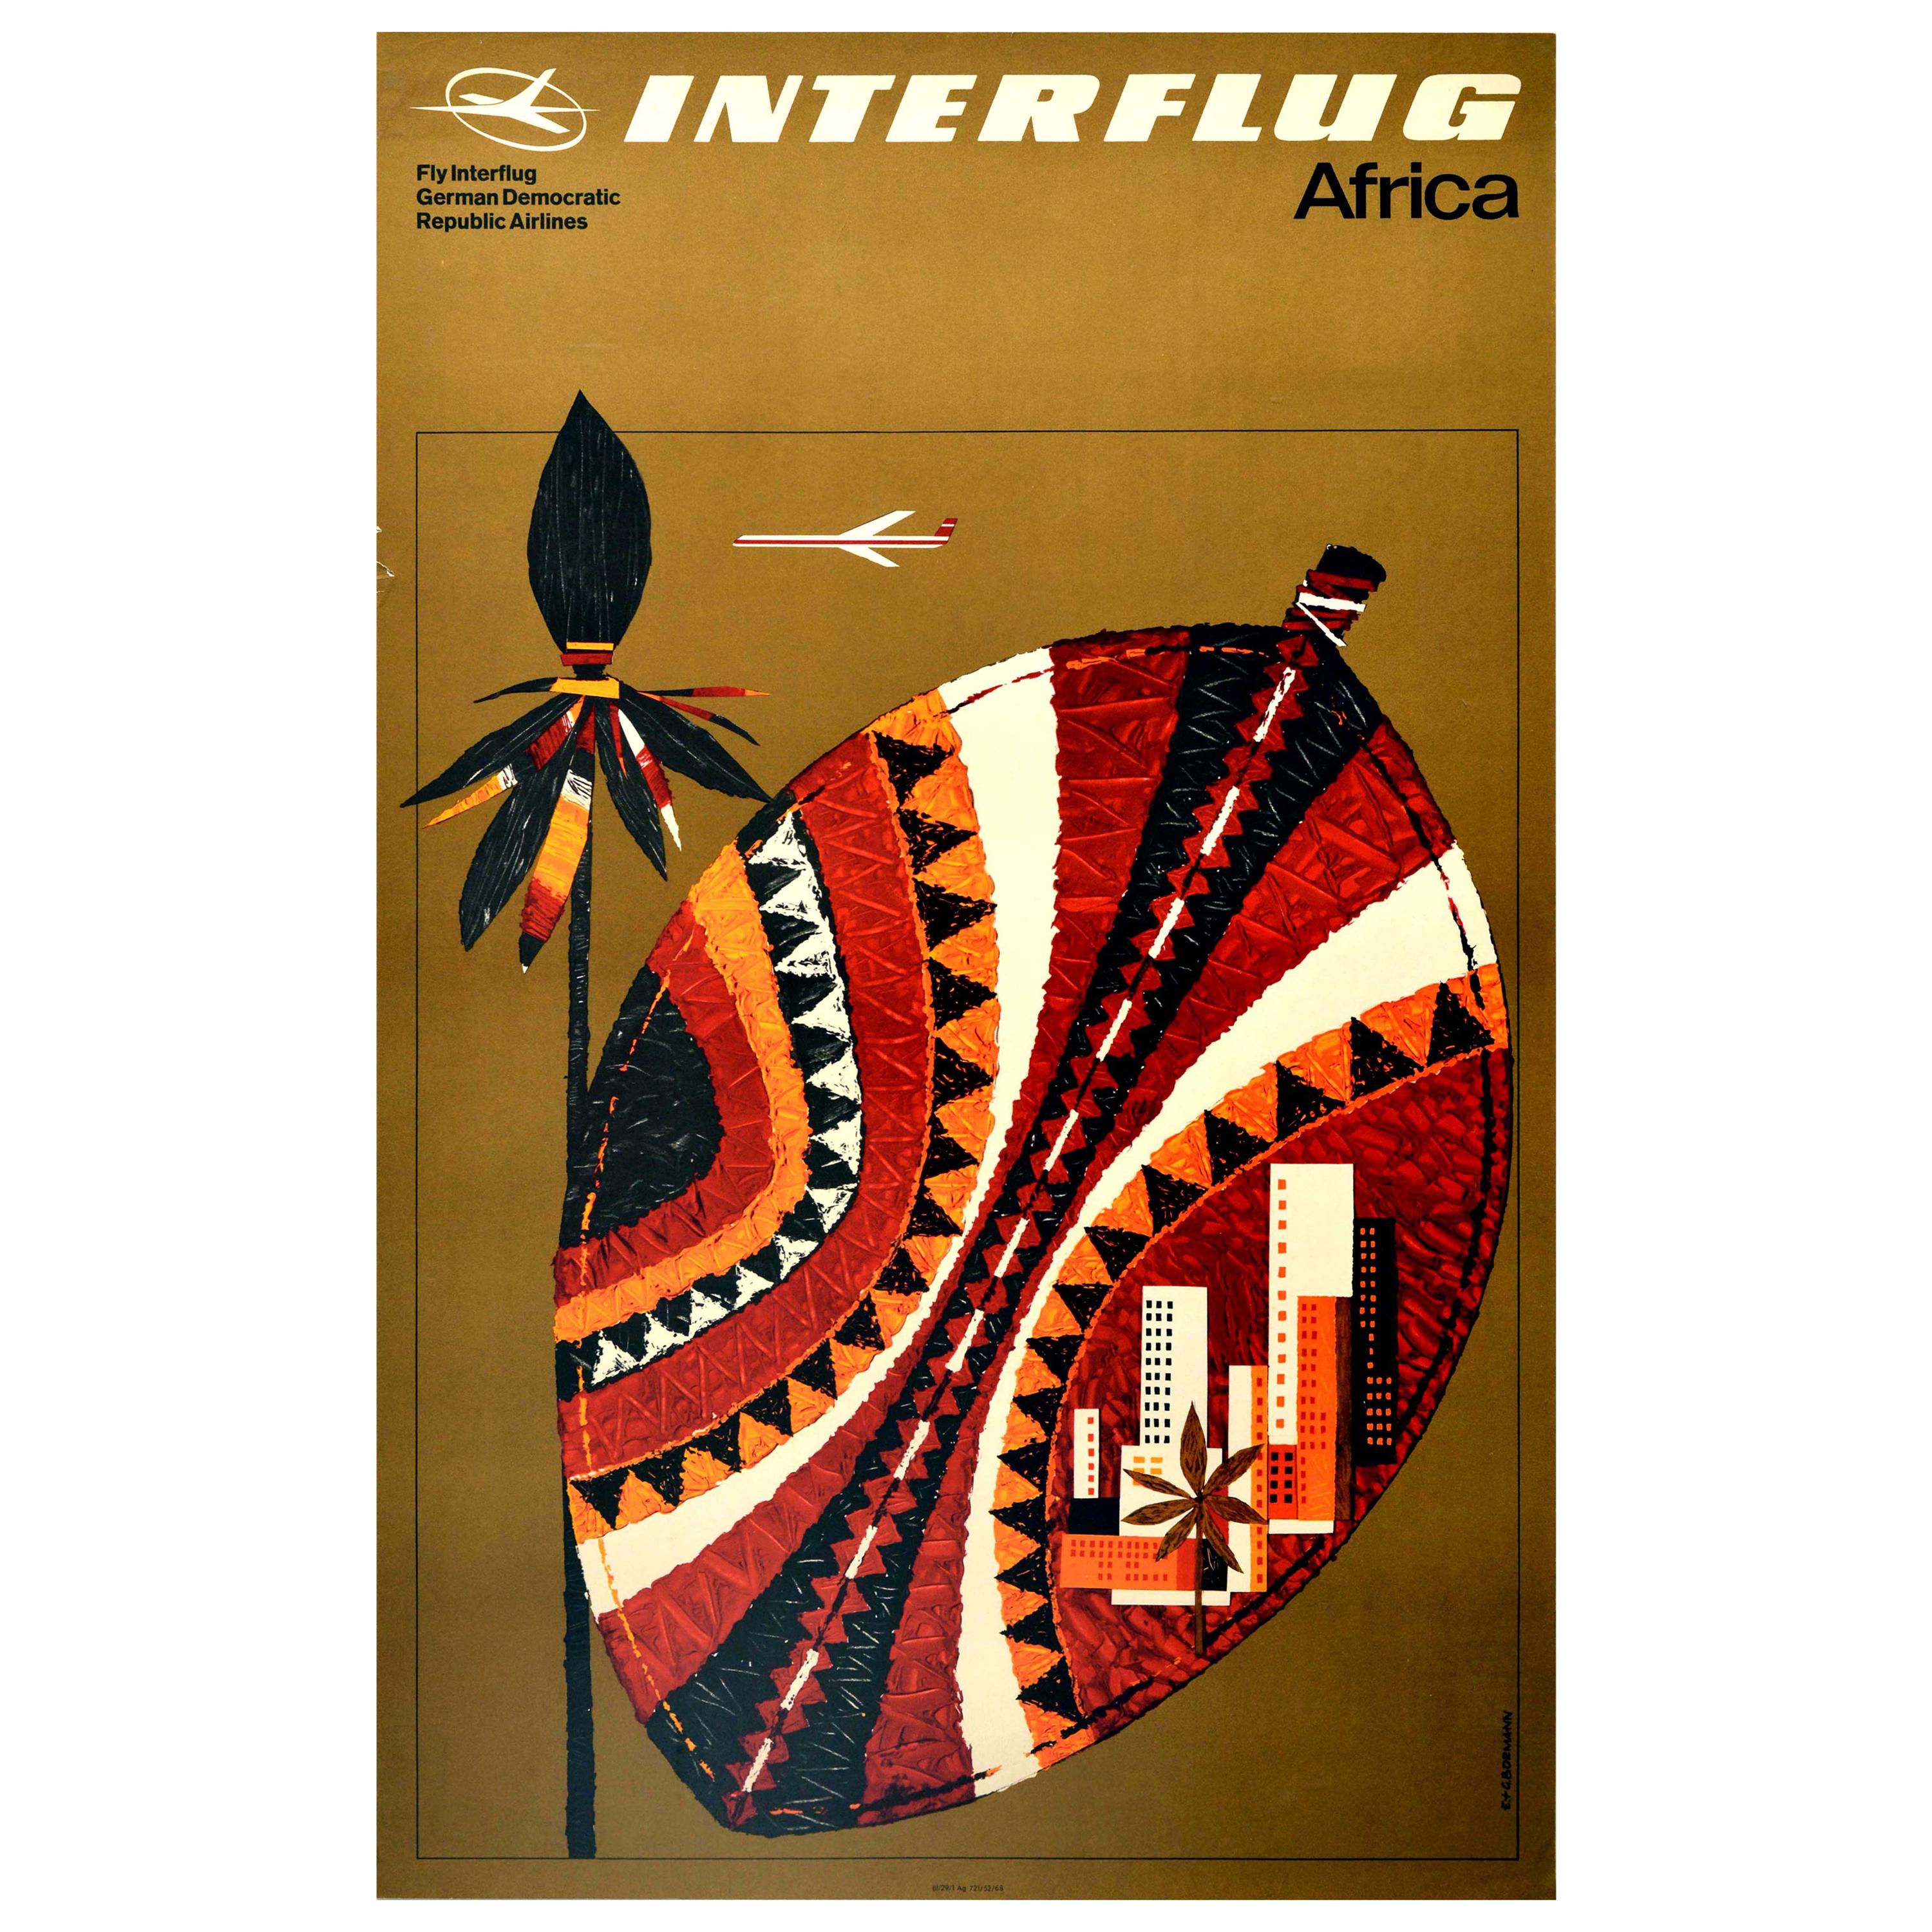 Original Vintage Poster Africa Fly Interflug German Democratic Republic Airlines For Sale